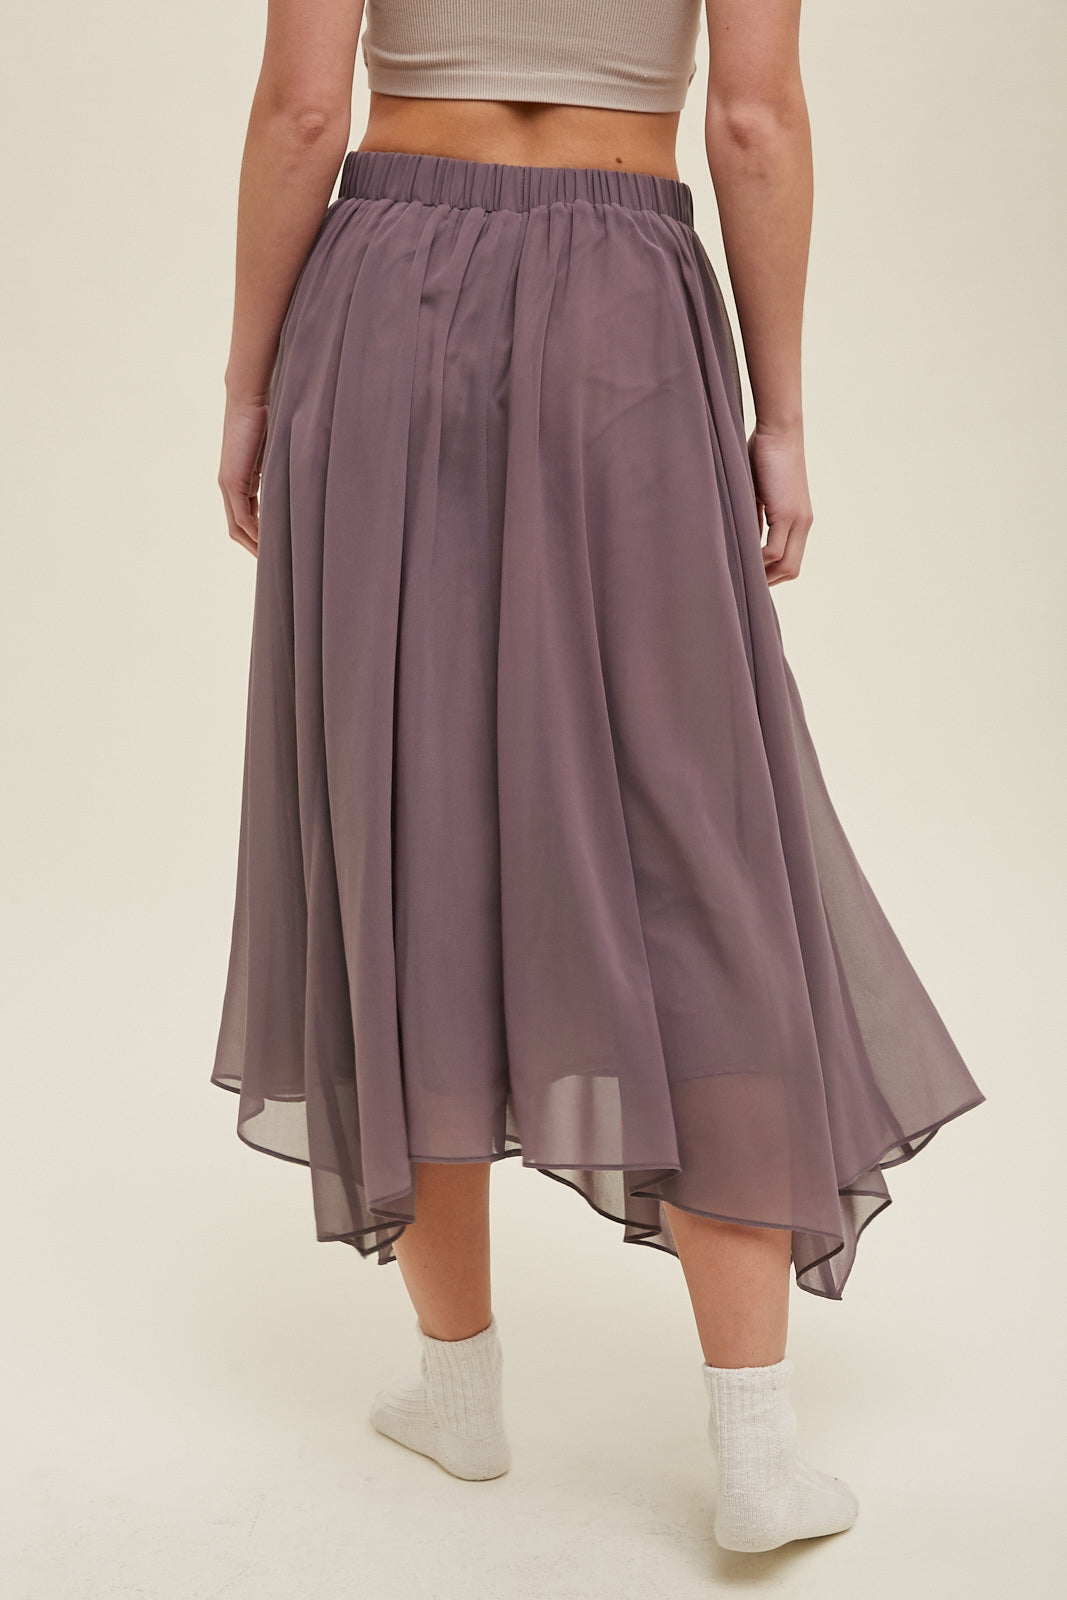 Wishlist® Chiffon Handkerchief Midi Skirt Lined